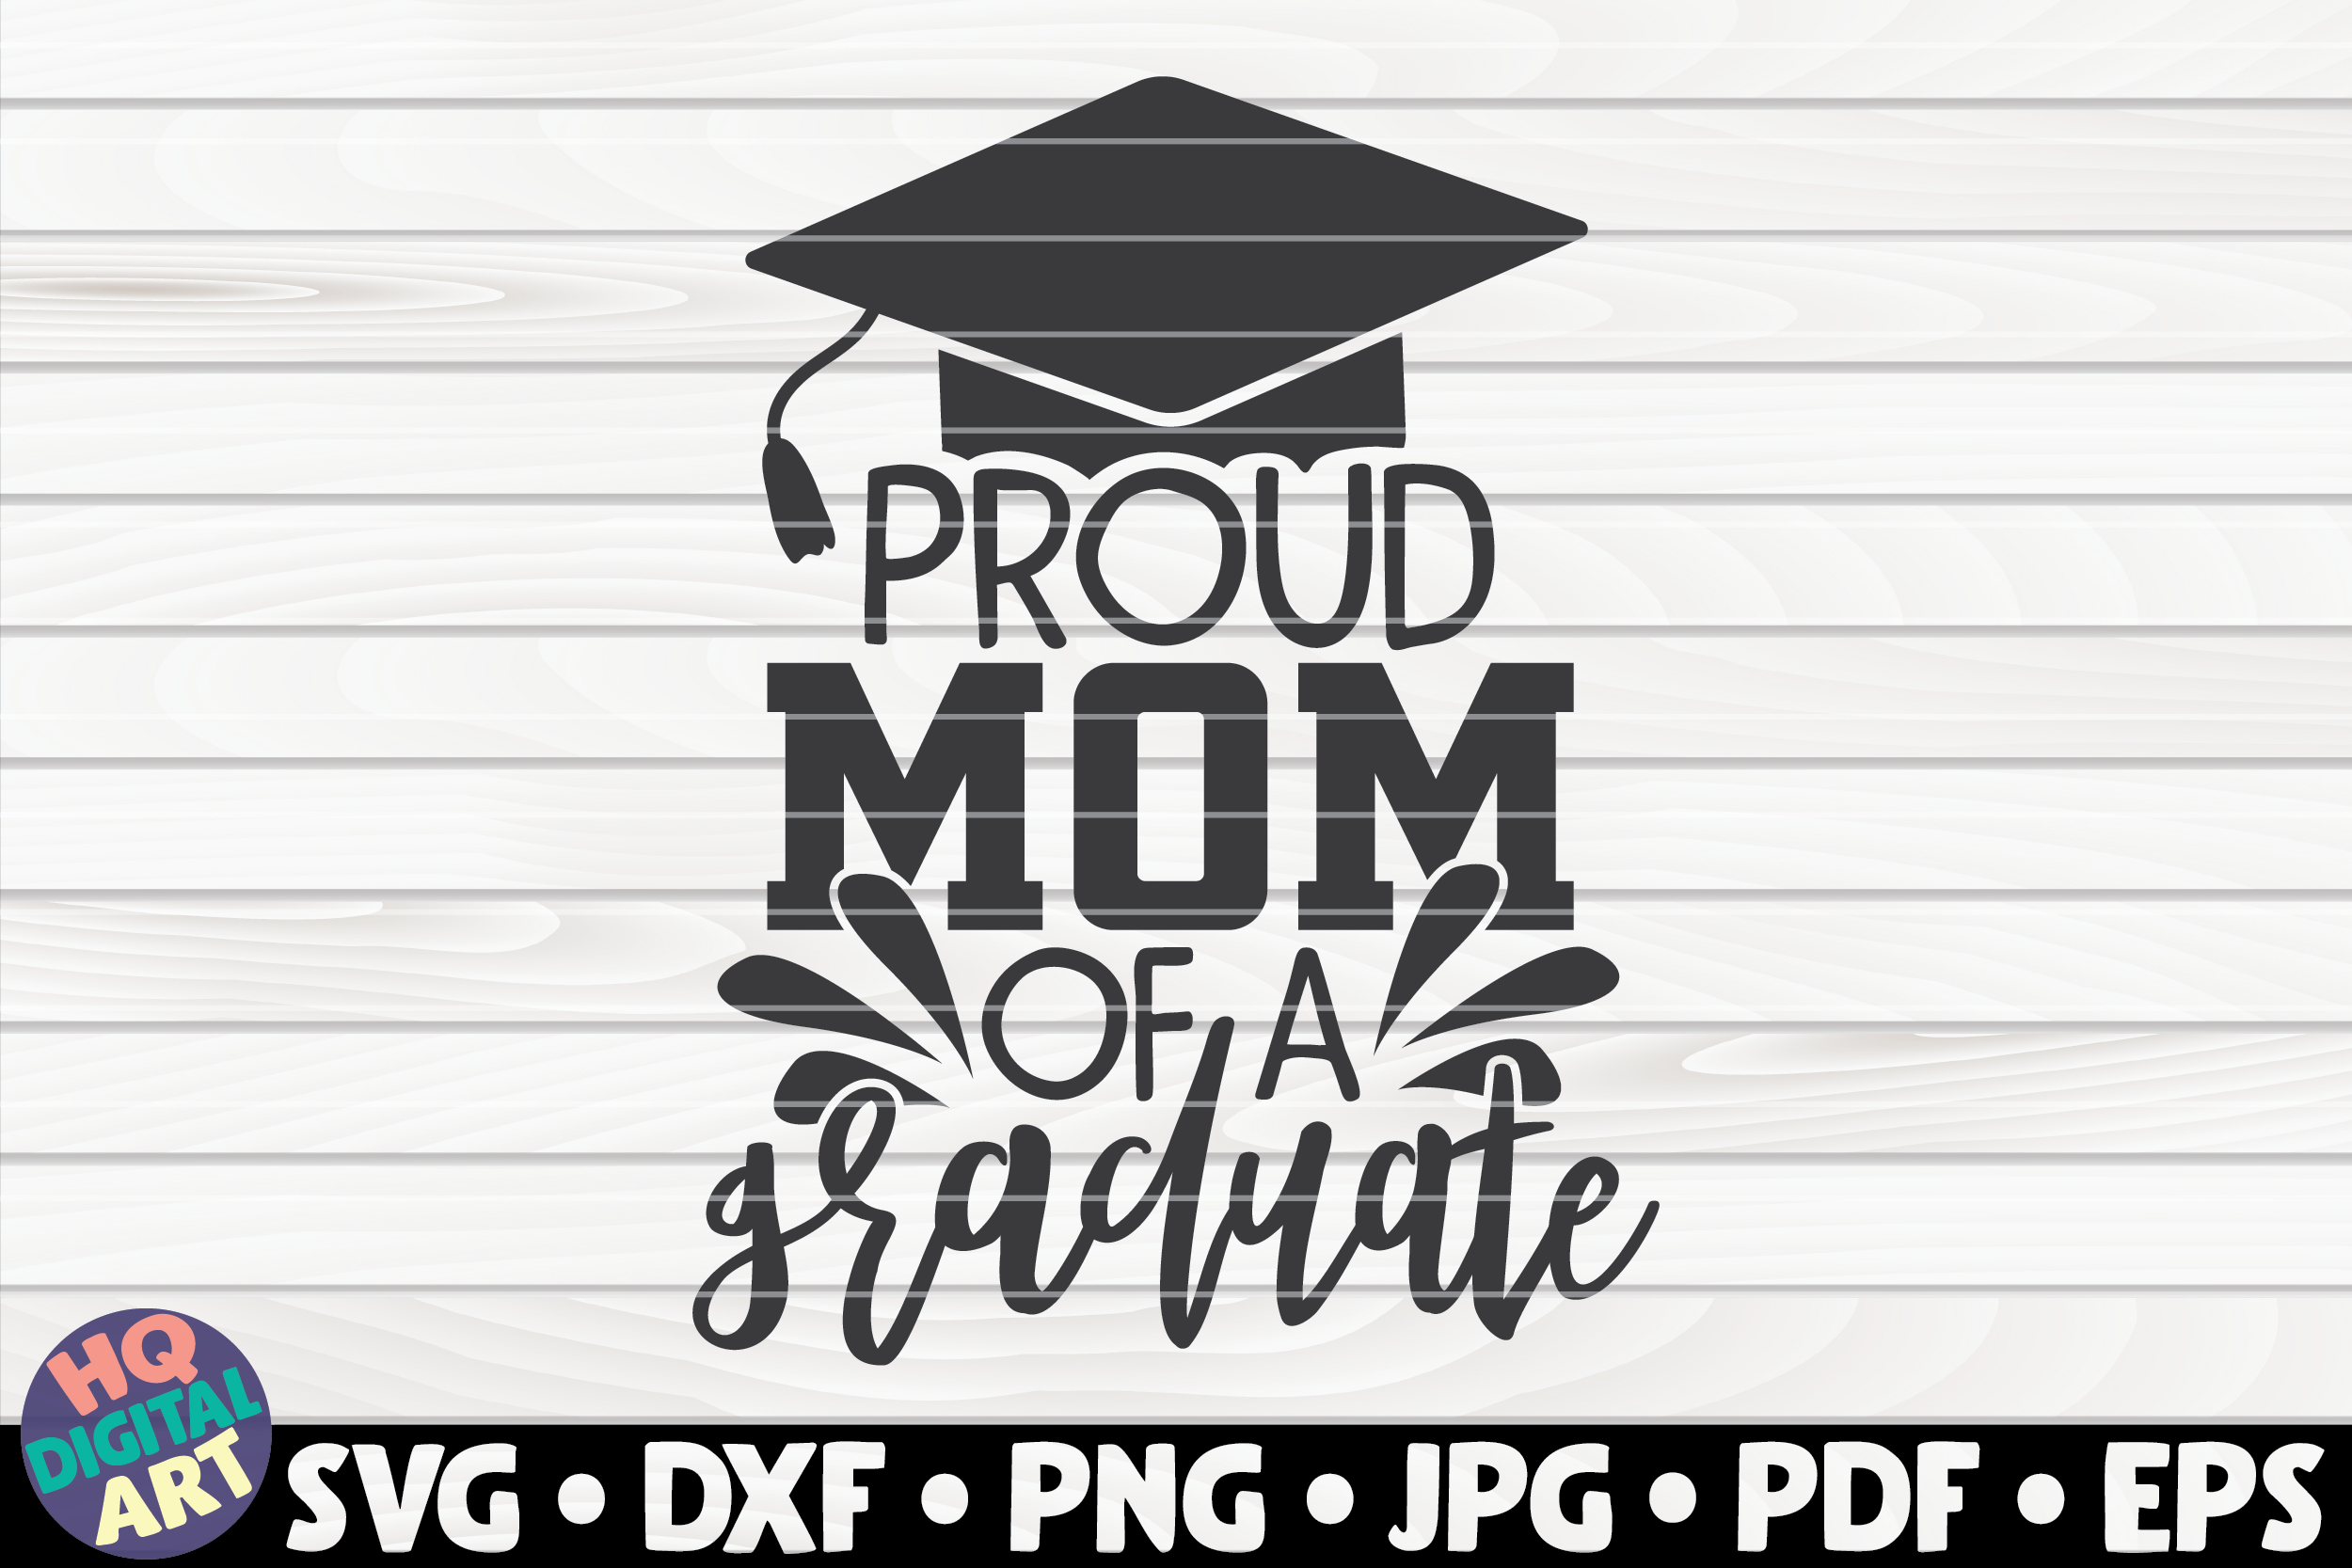 Proud Mom Of A Graduate Svg, Mom Of Graduate Svg, Graduation Svg, Dxf